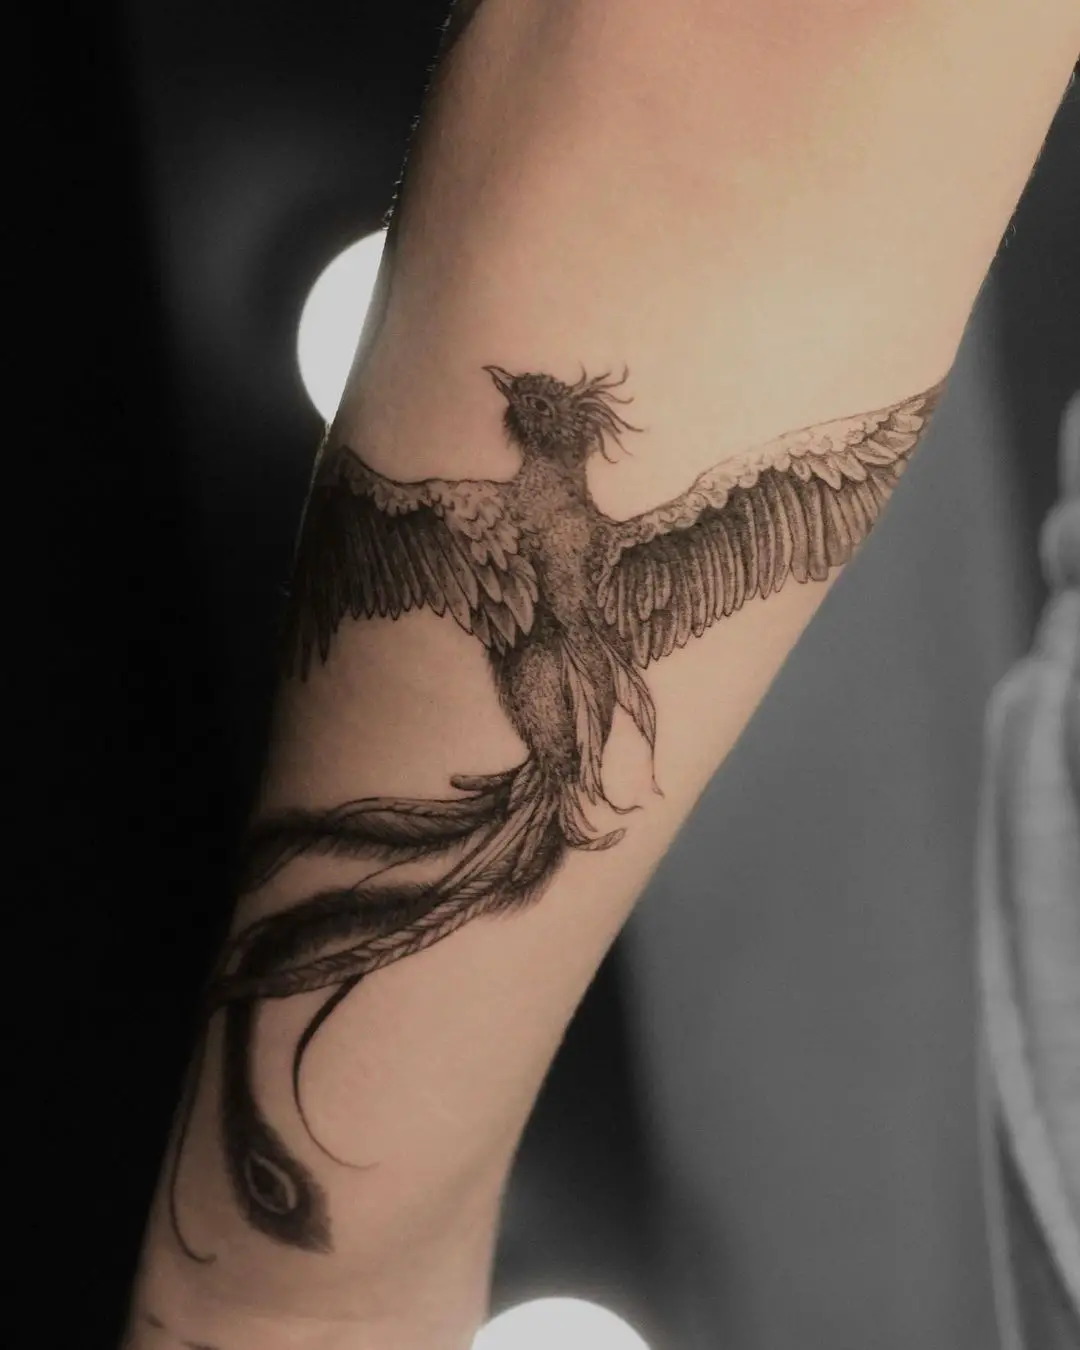 Phoenix sleeve tattoo by um.ink